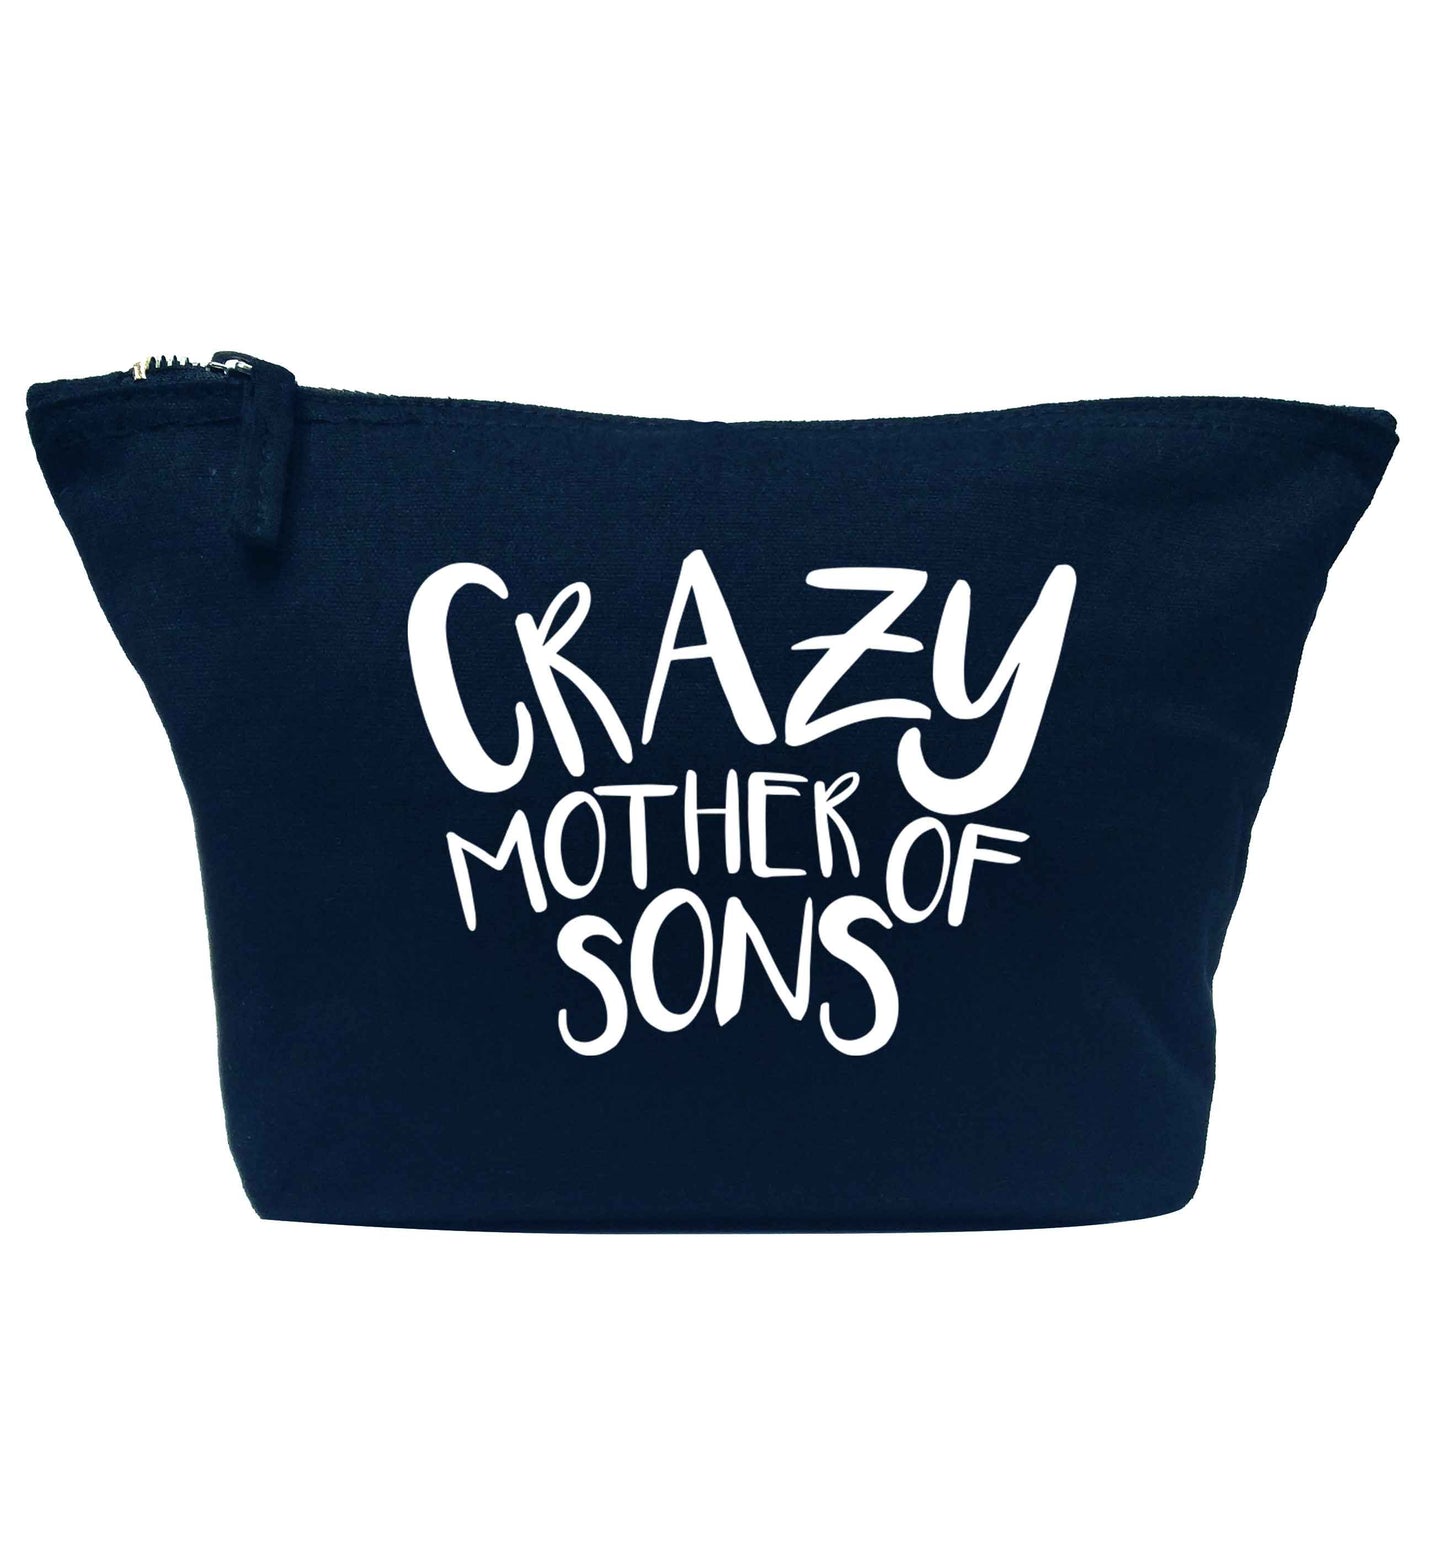 Crazy mother of sons navy makeup bag